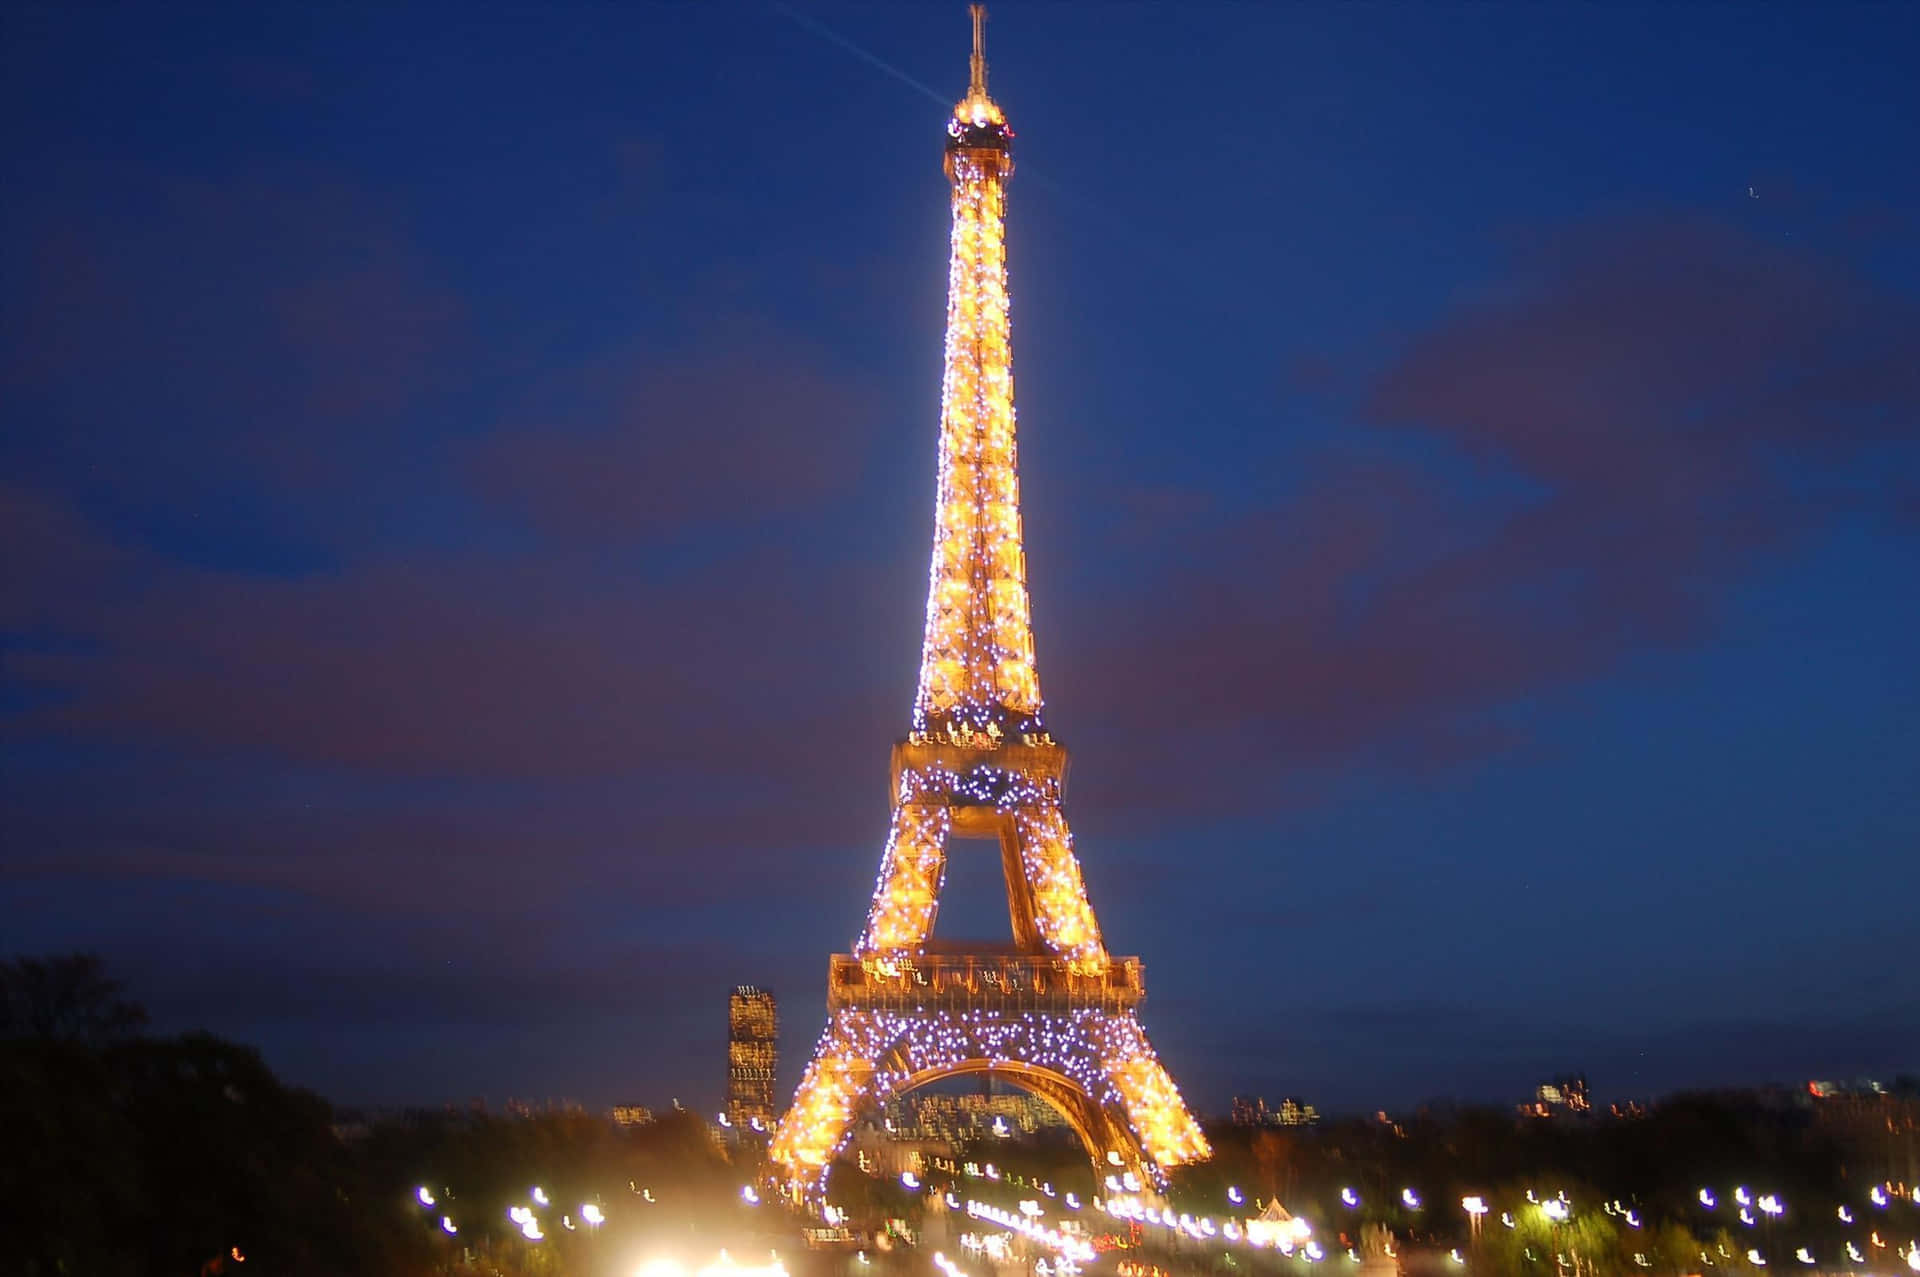 Paris,stad Av Ljus: Eiffeltornet